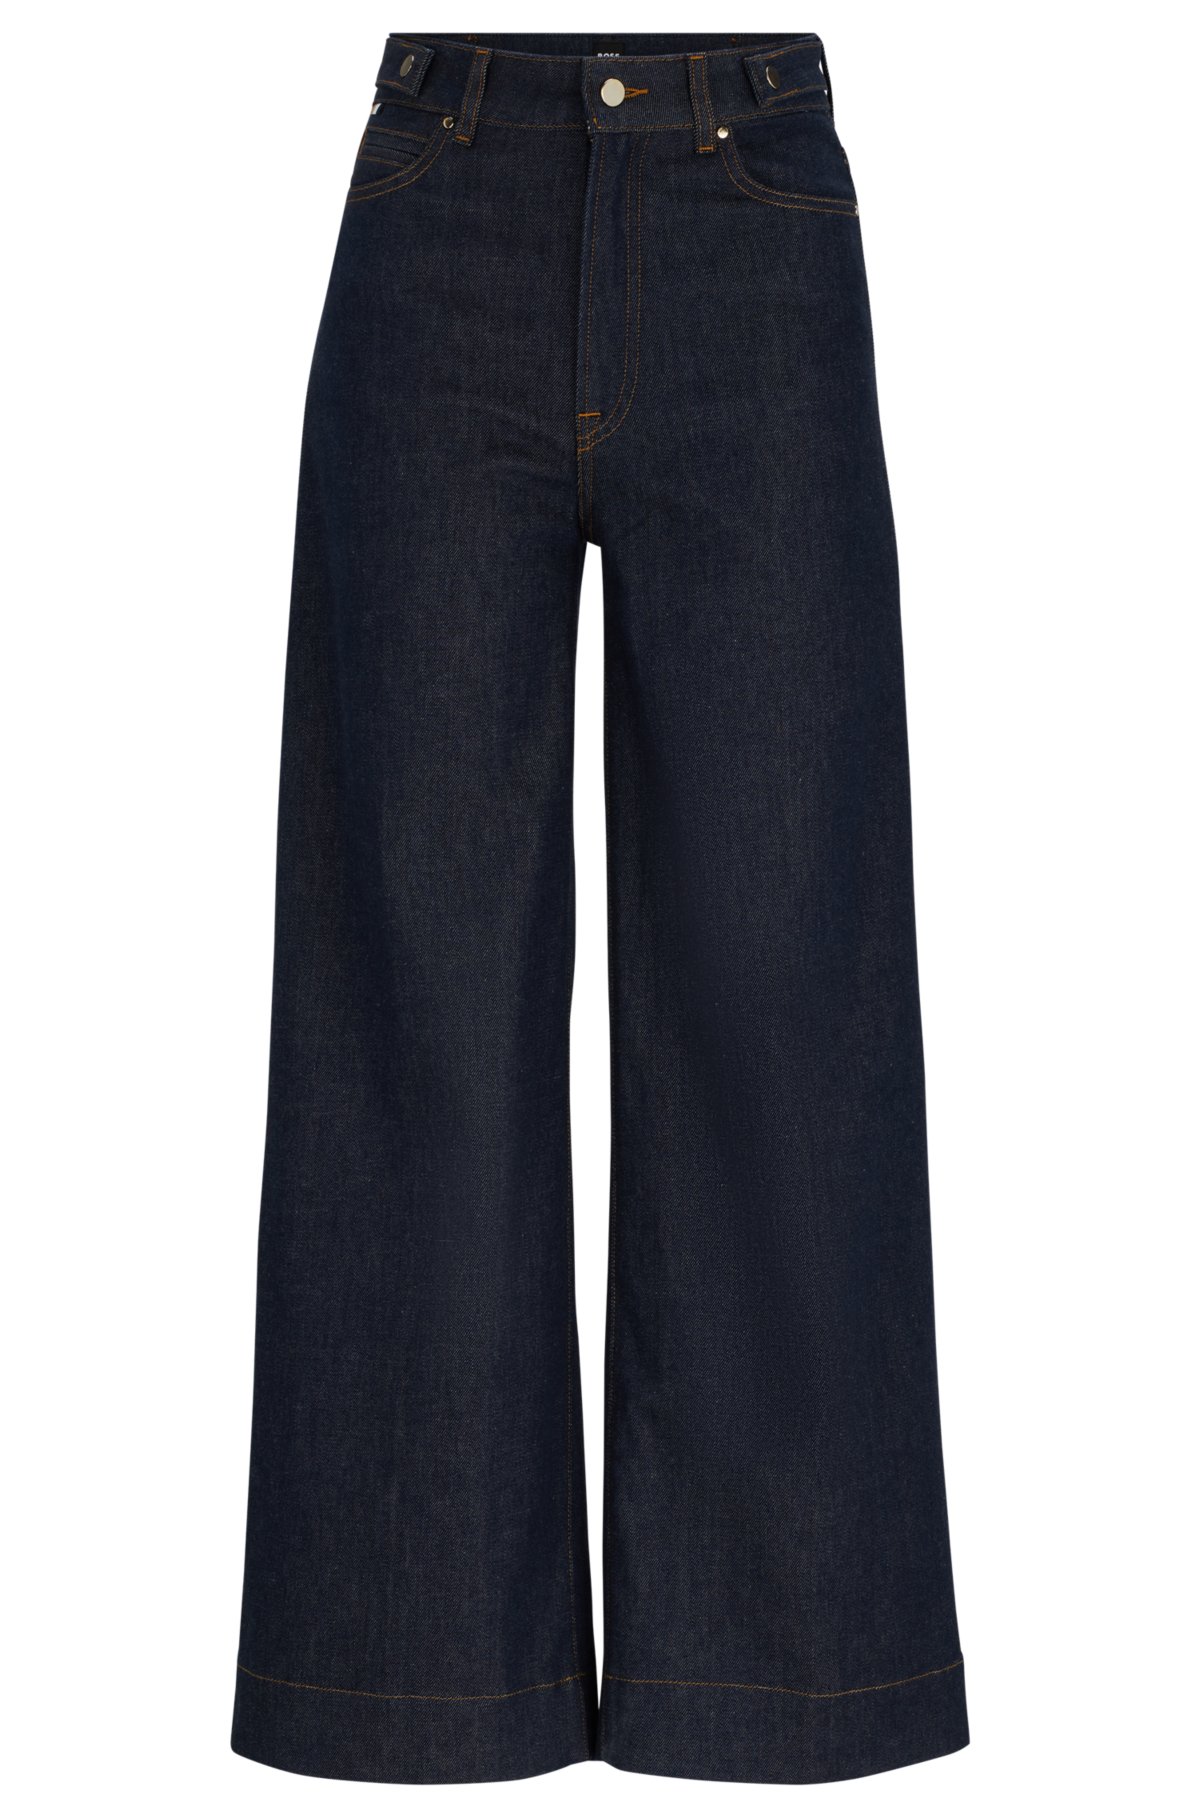 Slim-fit wide-leg jeans in navy stretch denim